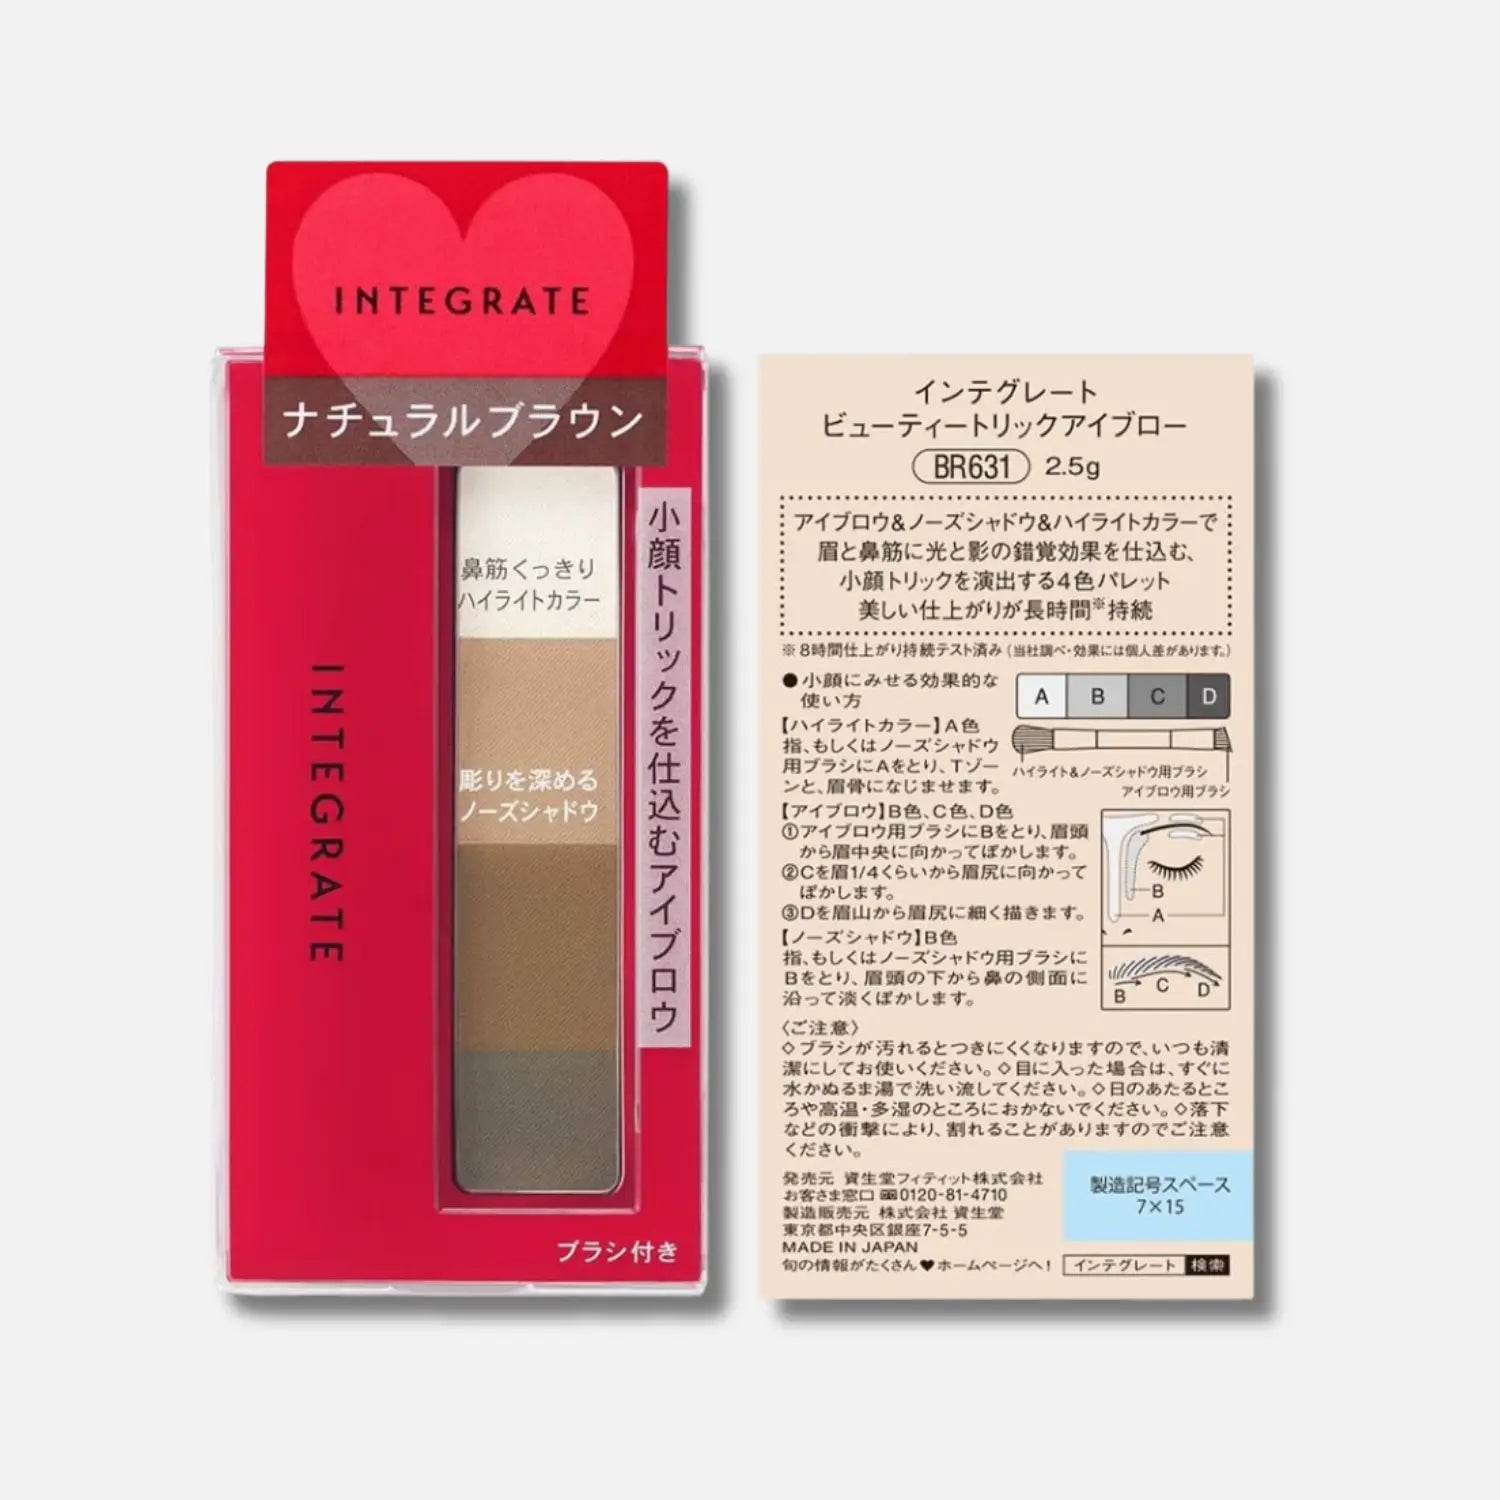 Shiseido Integrate Beauty Trick Eyebrow Pallette 2.5g (Various Shades) - Buy Me Japan